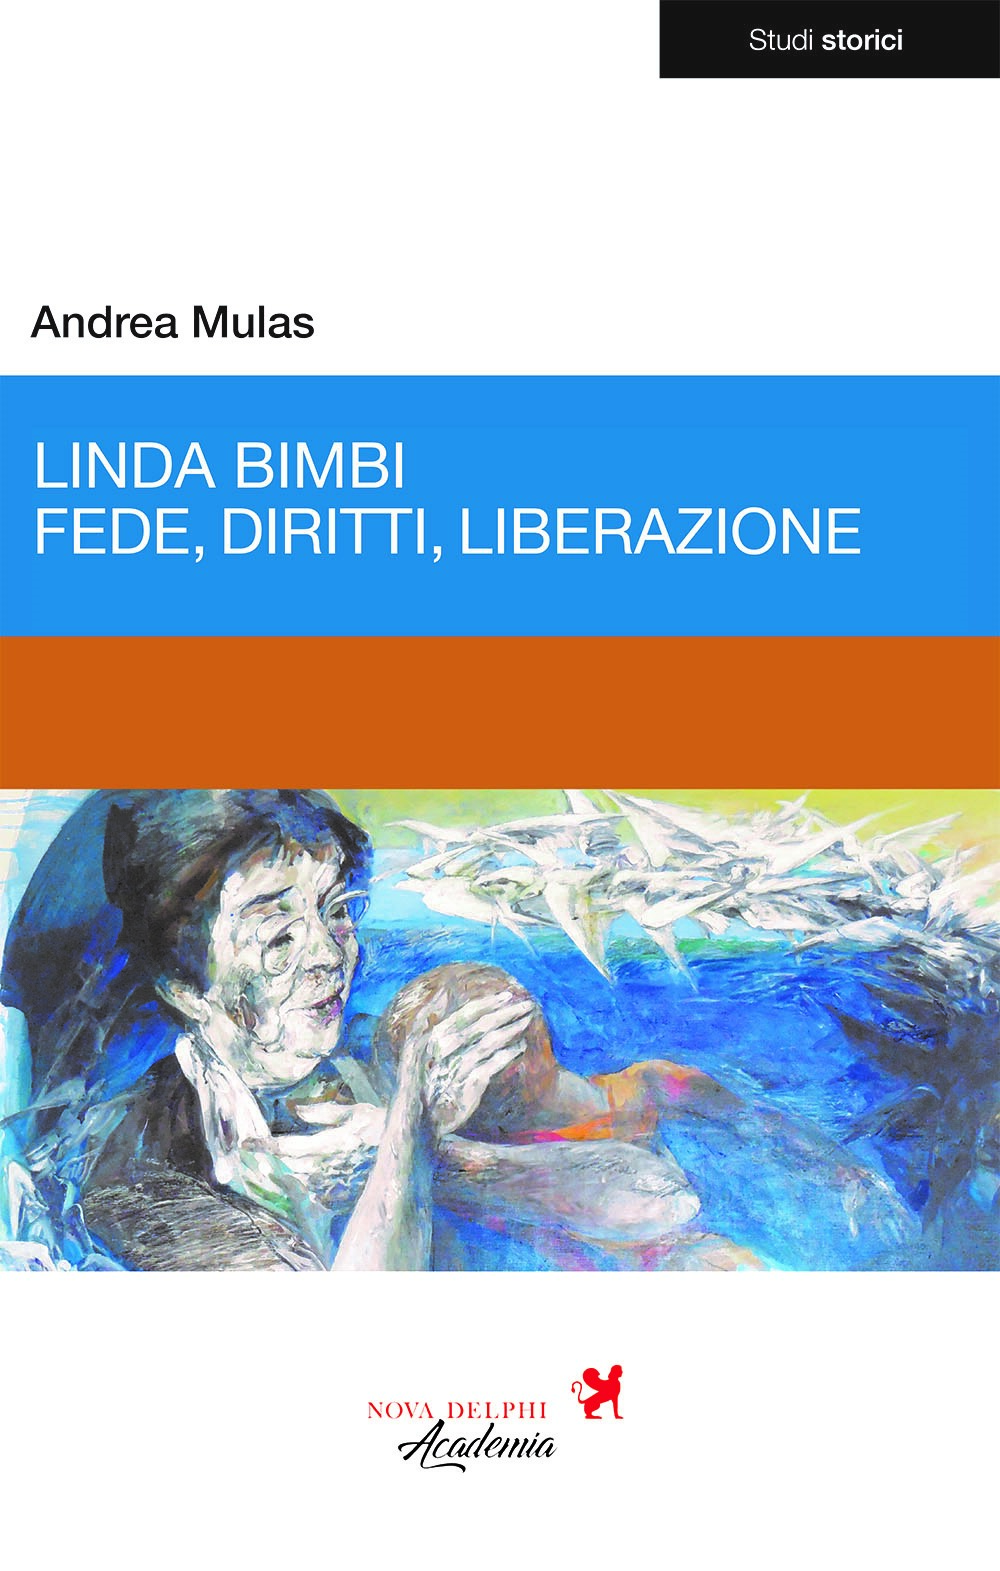 LINDA-BIMBI_COVER-FRONT